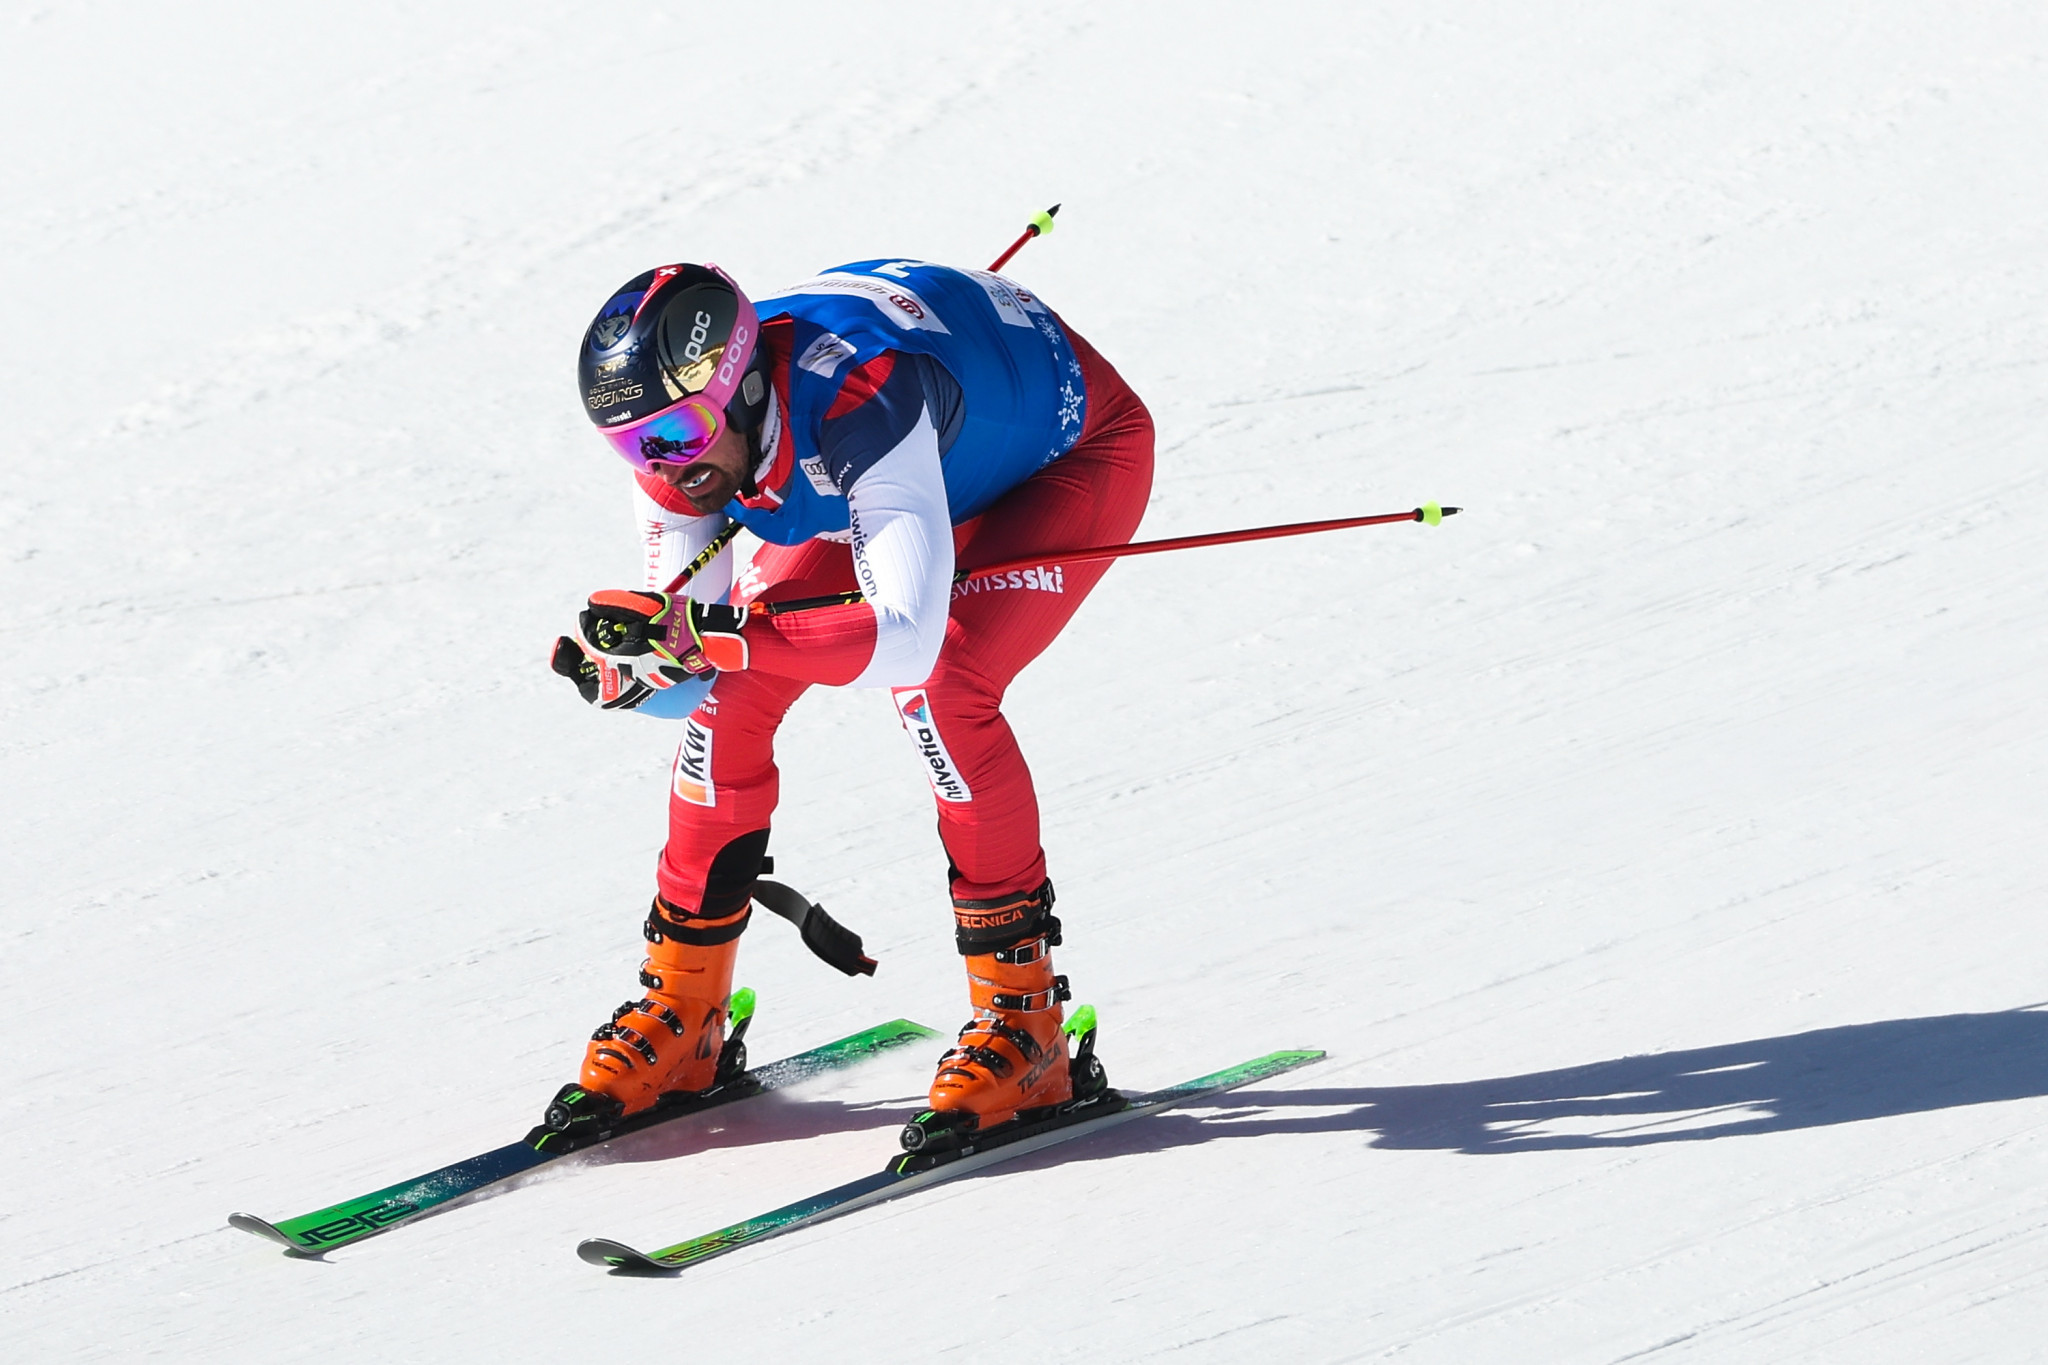 Regez and Näslund win again at Ski Cross World Cup in Idre Fjäll